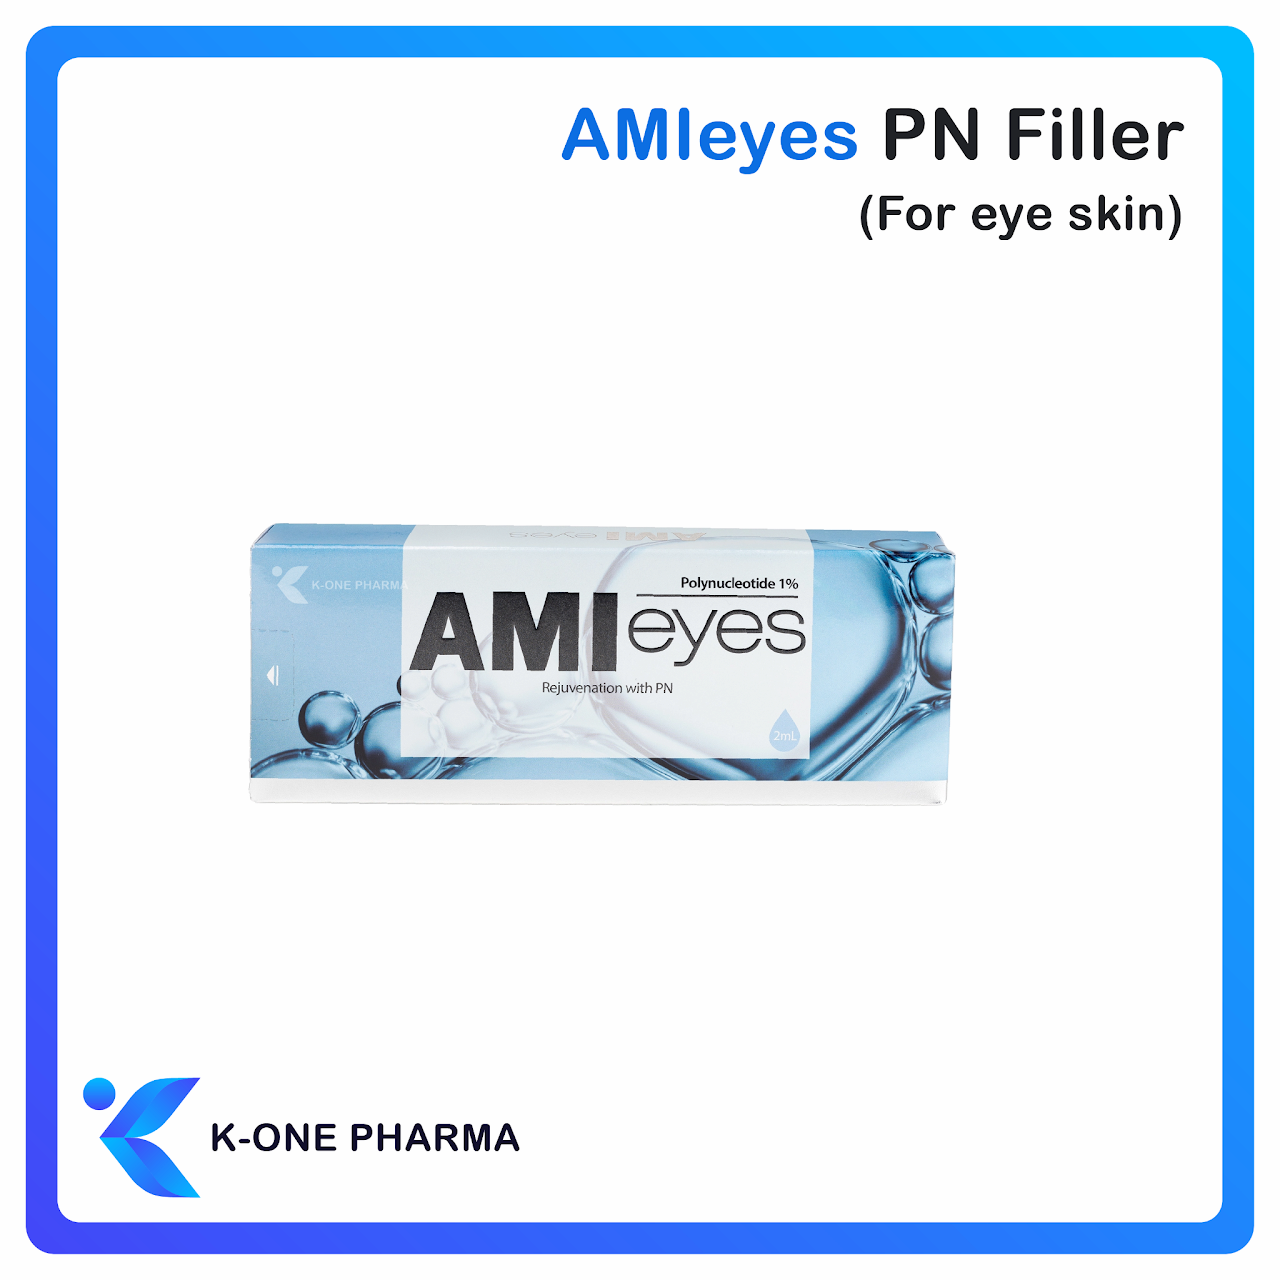 AMIEYES PN FILLER For Eyeskin Revitalization Reduction Of Wrinkles